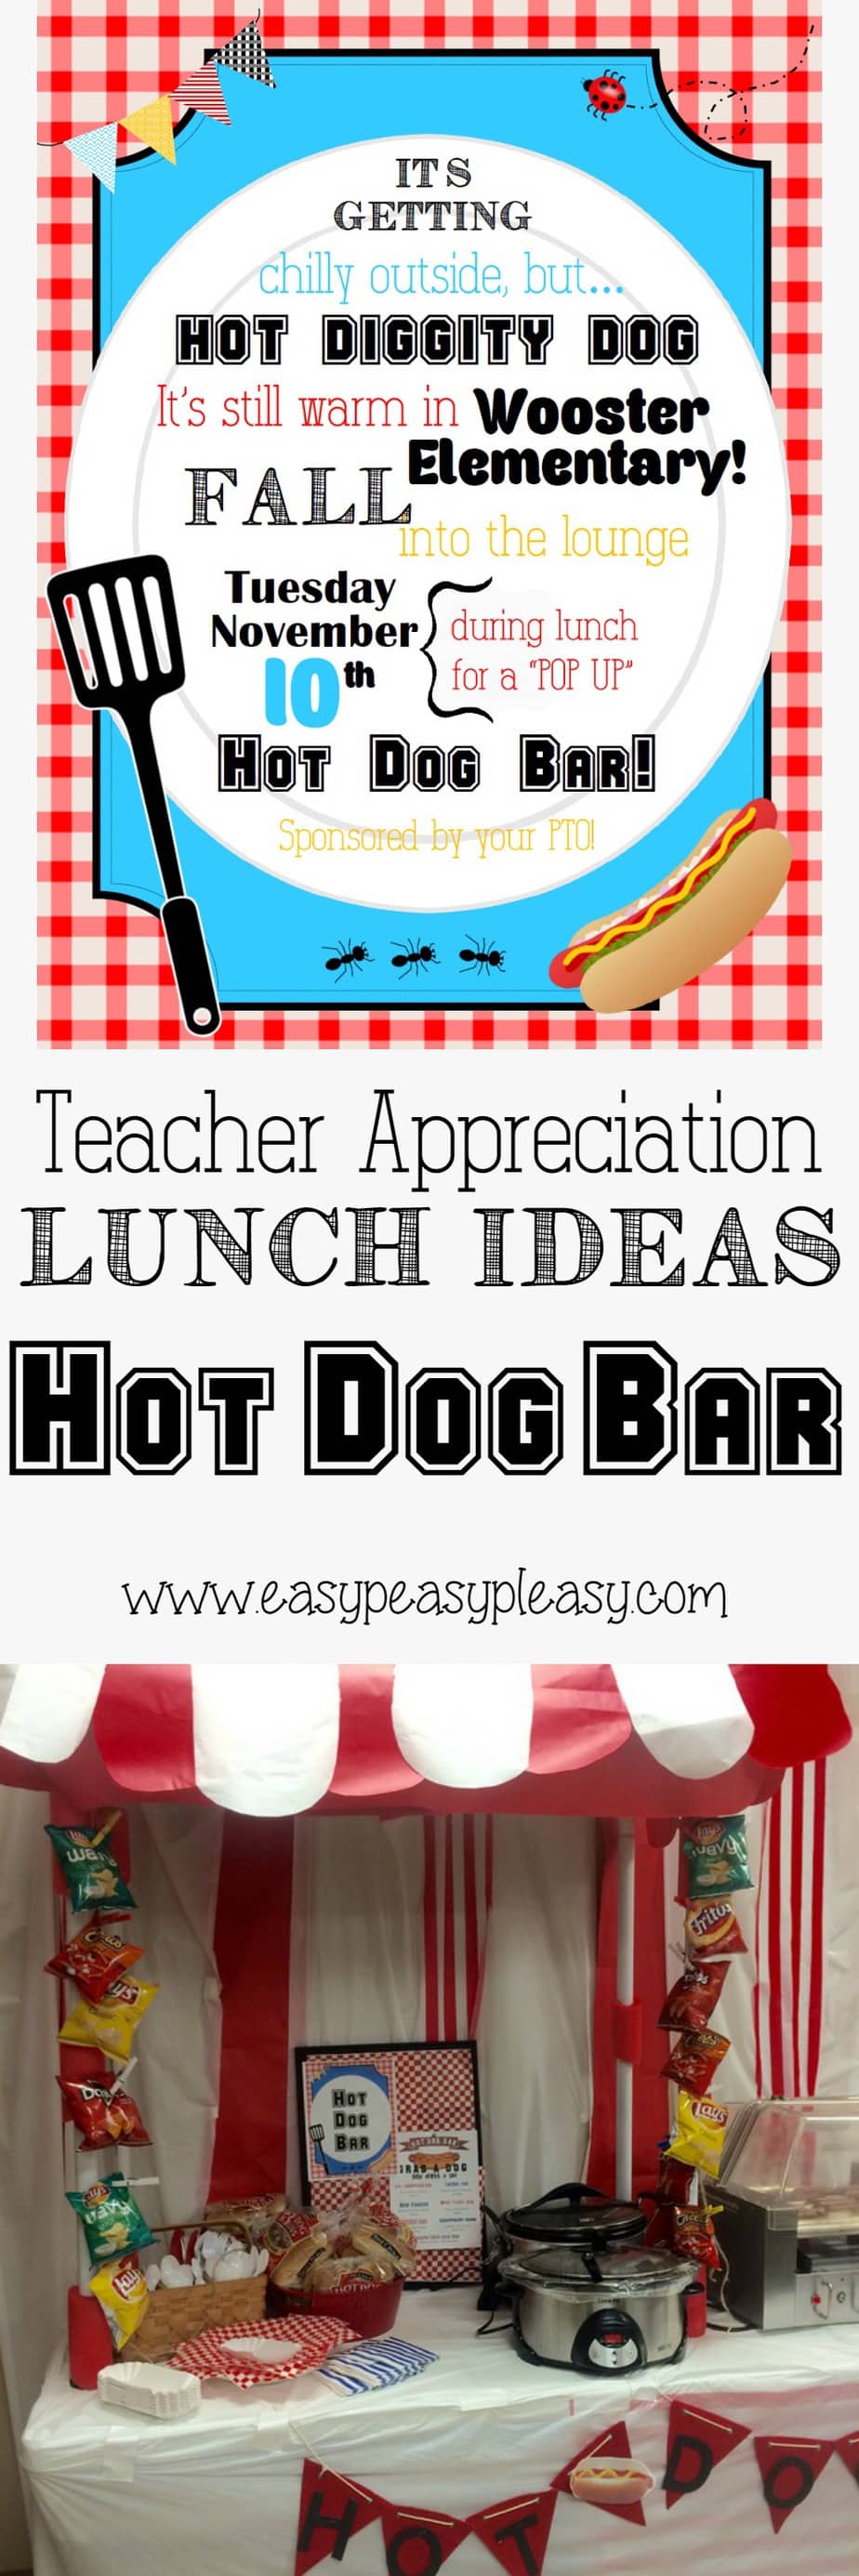 Teacher Appreciation Lunch Ideas Hot Dog Bar Free blank flyer that you can customize